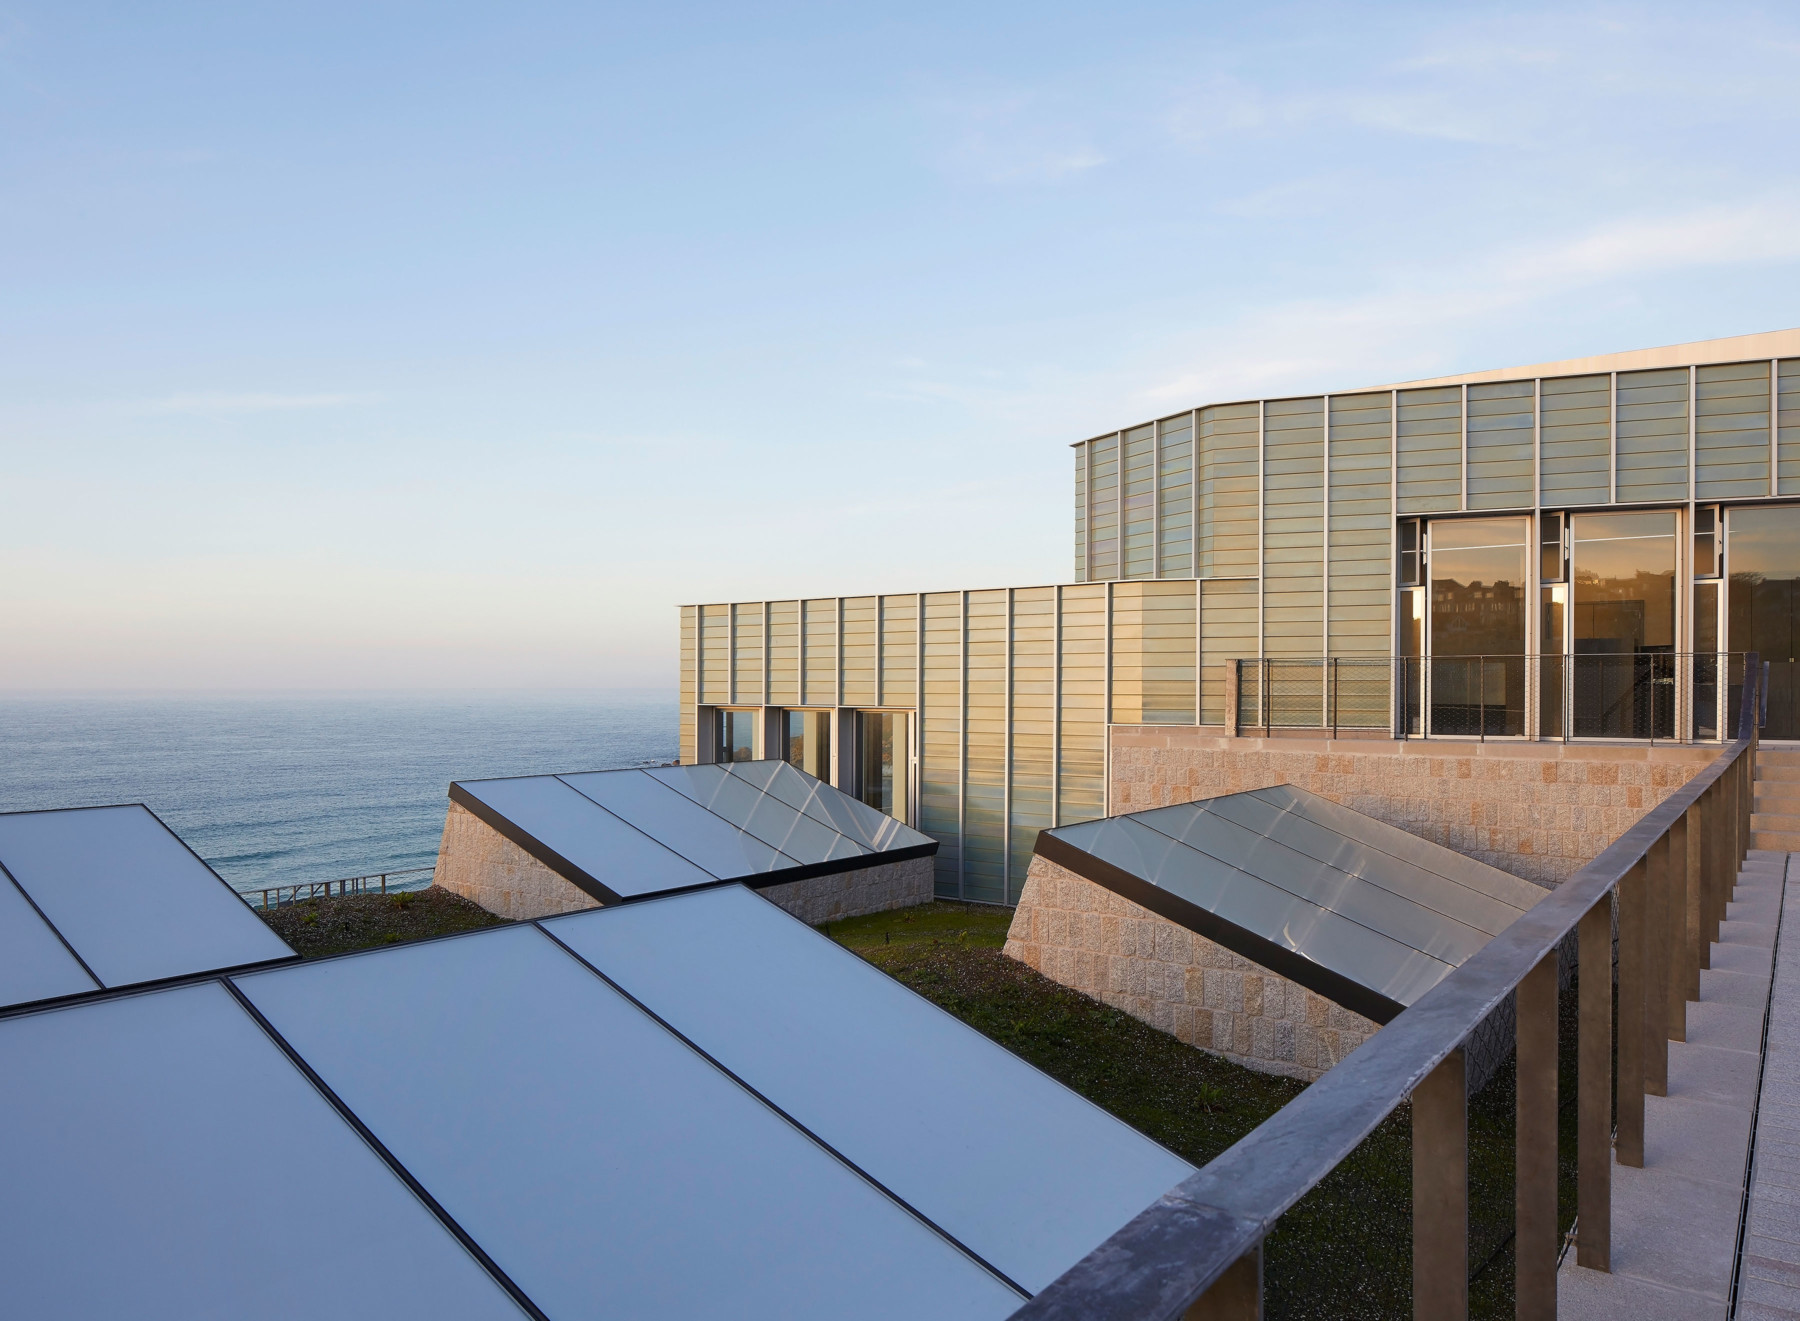 Jamie-Fobert-Architects Tate-St-Ives Cornwall Hufton+Crow faience rooflights